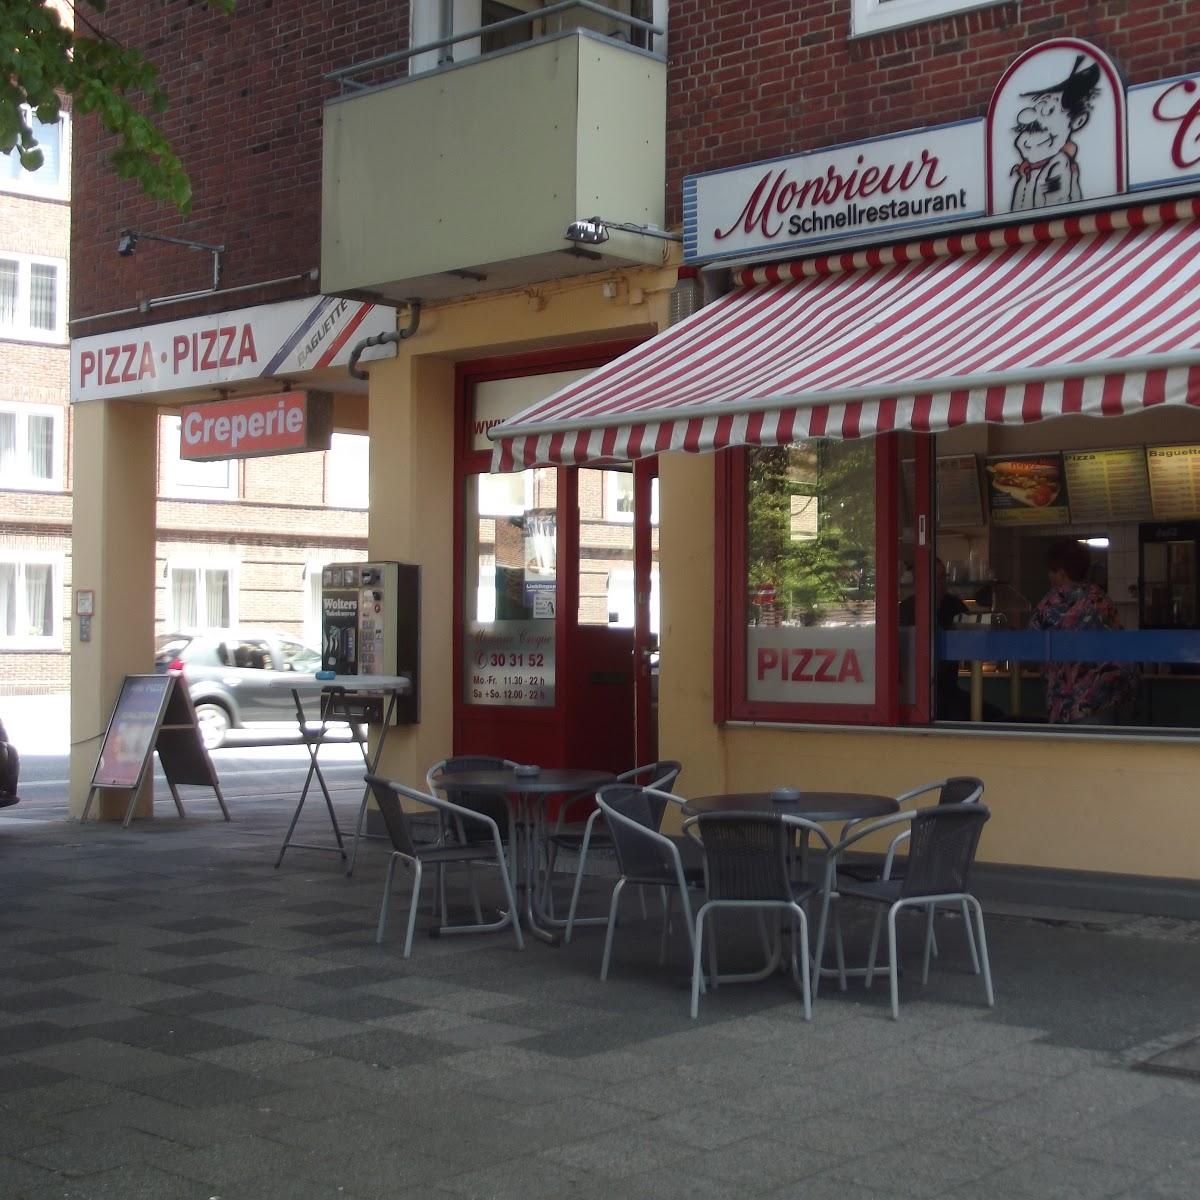 Restaurant "Monsieur Croque Baguetterie seit 1981" in Bremerhaven